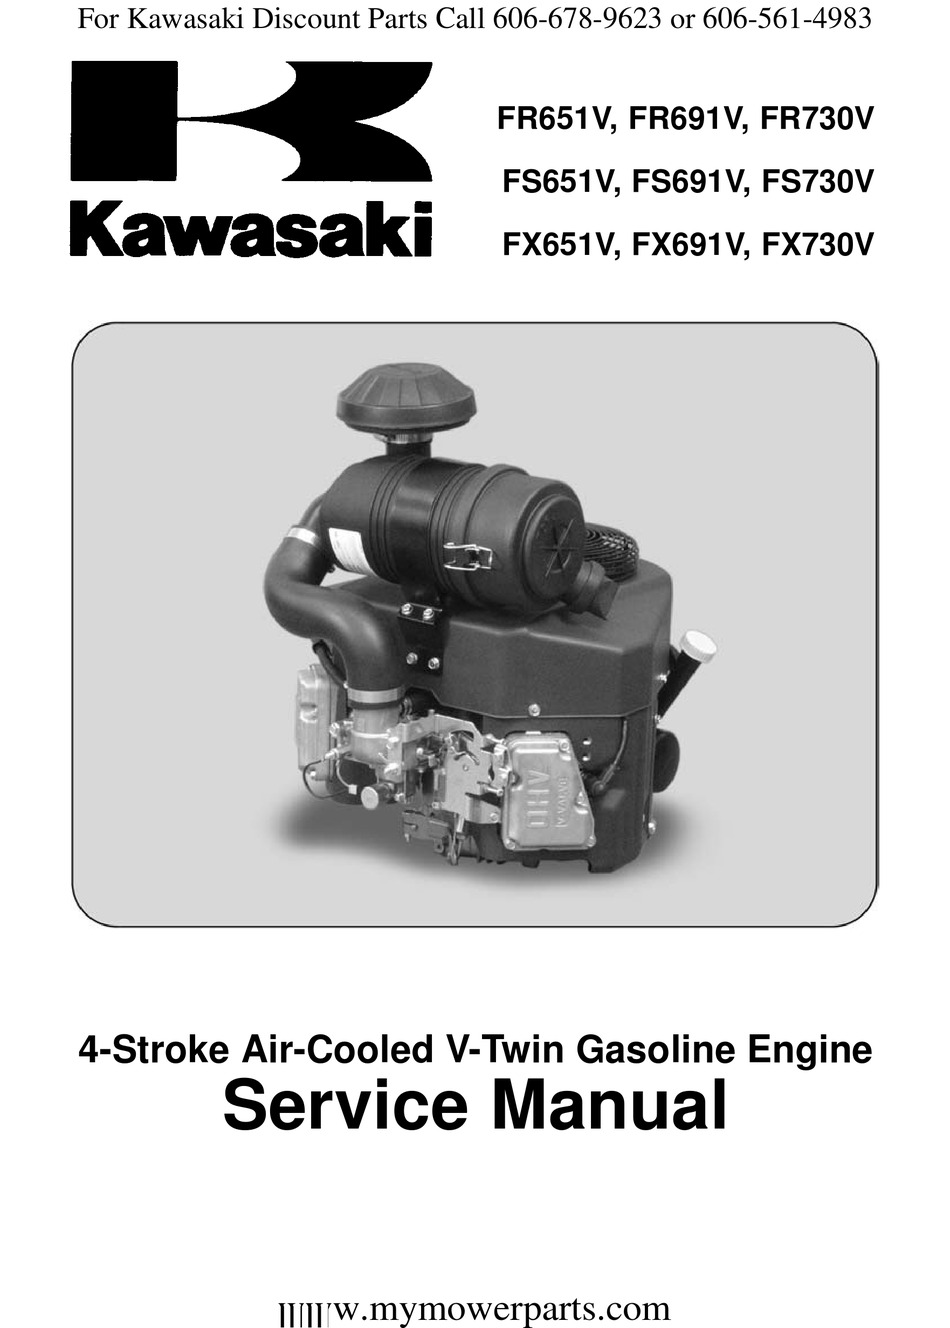 rf7j service manual